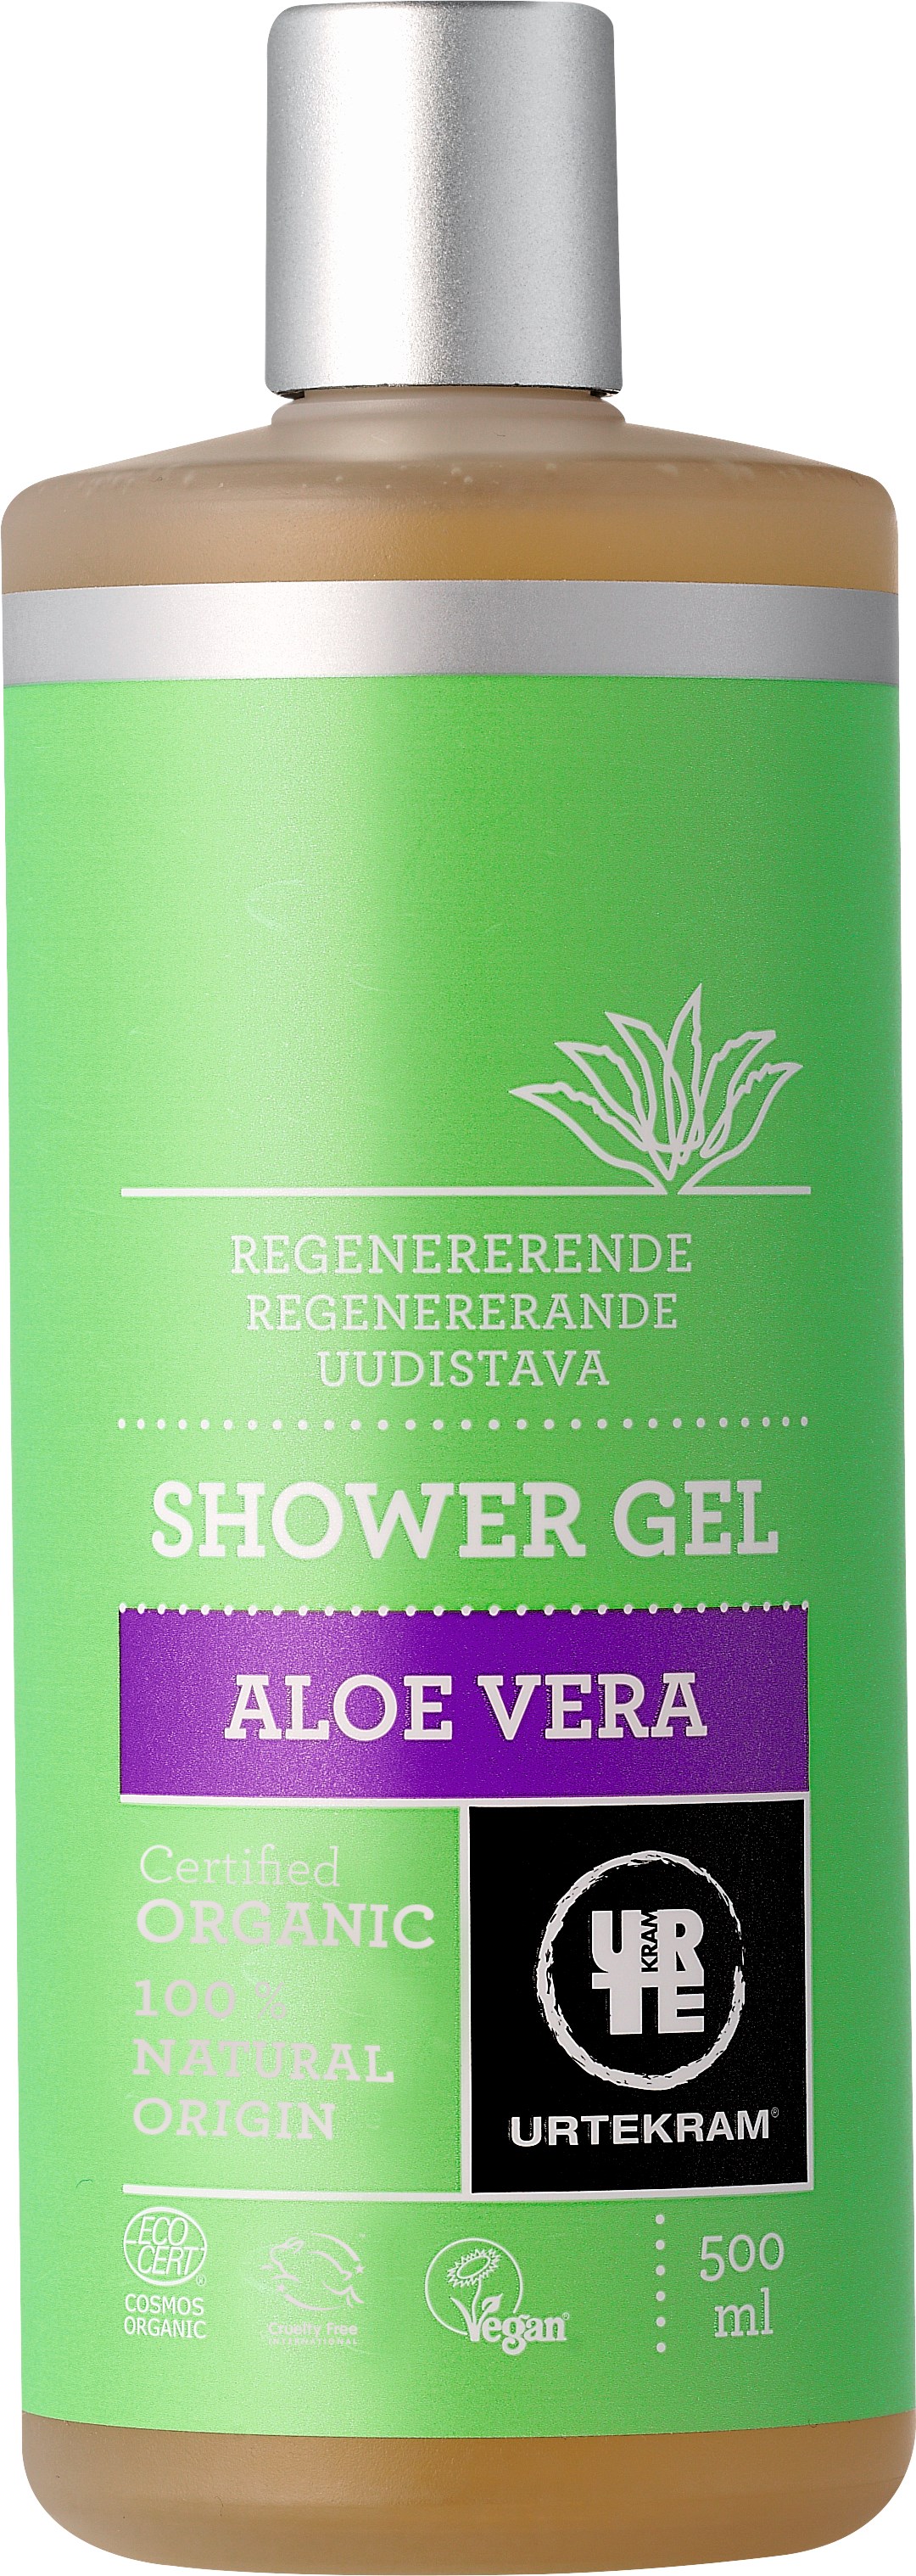 Urtekram Aloe Vera Shower Gel 500ml